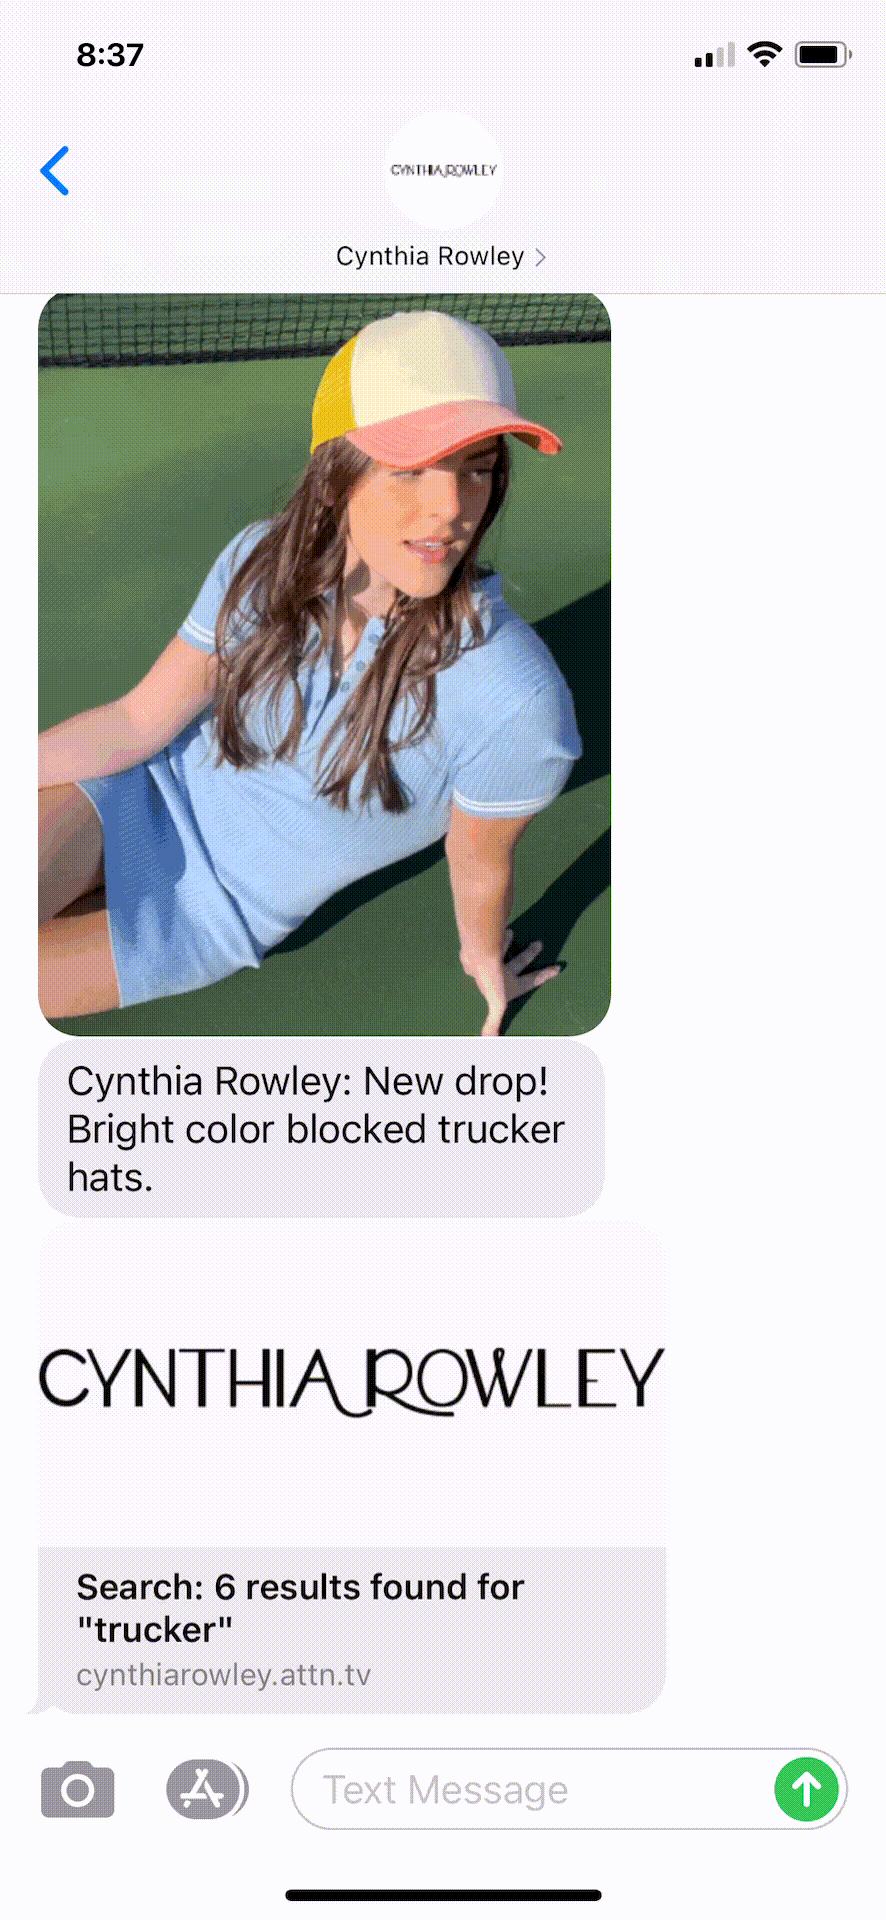 Cynthia-Rowley-Text-Message-Marketing-Example-04.14.2021